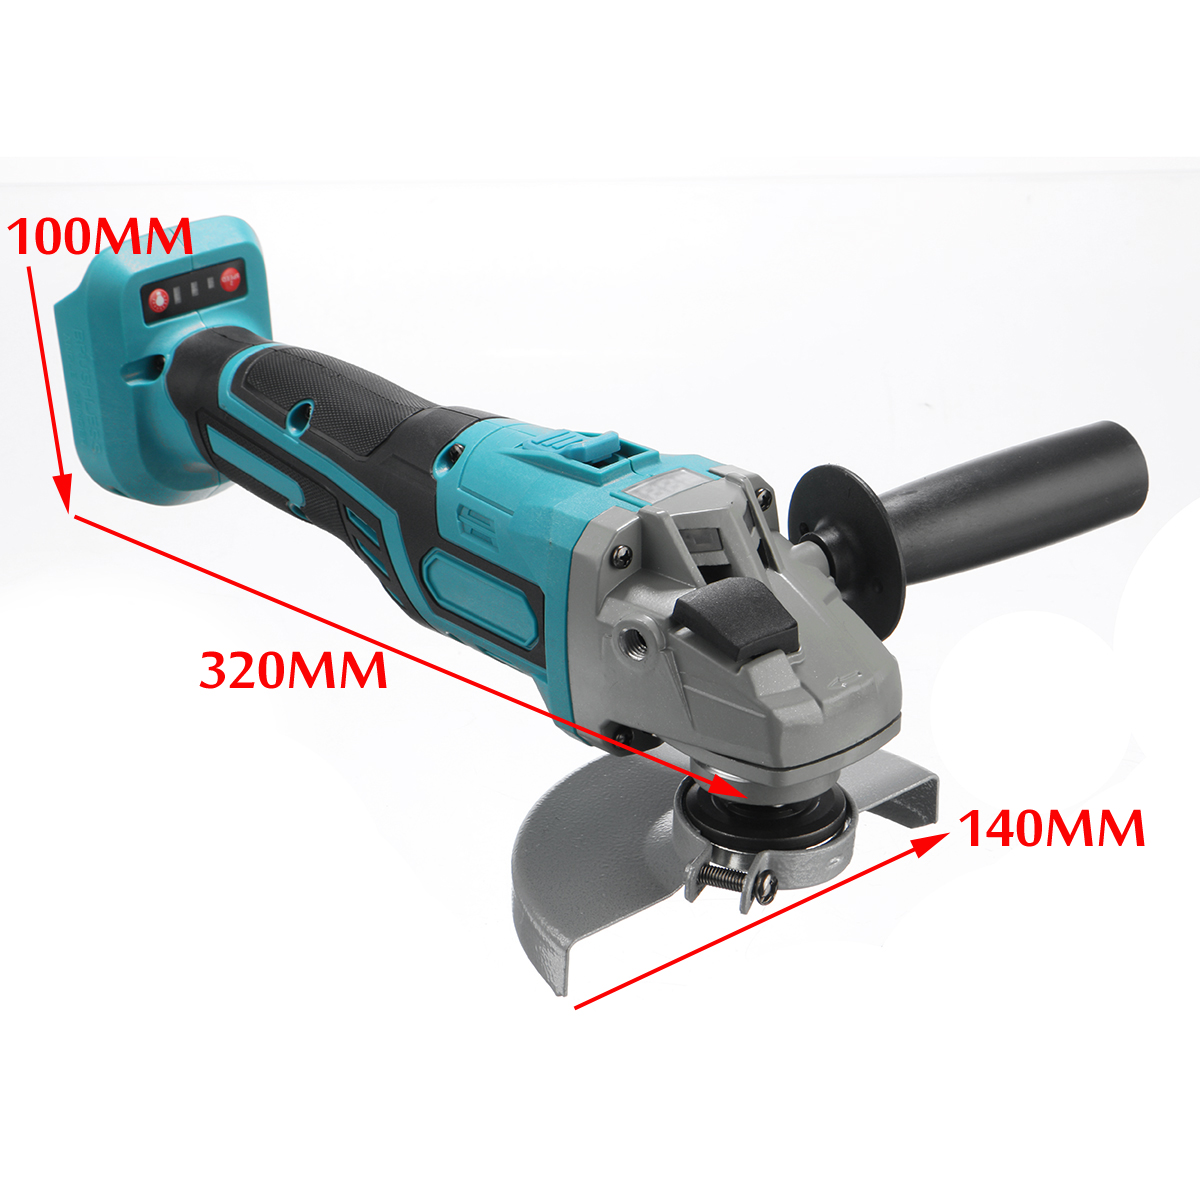 125mm-Brushless-Cordless-Angle-Grinder-Polishing-Cutting-Machine-Adapted-to-18V-Makita-Battery-1628299-4